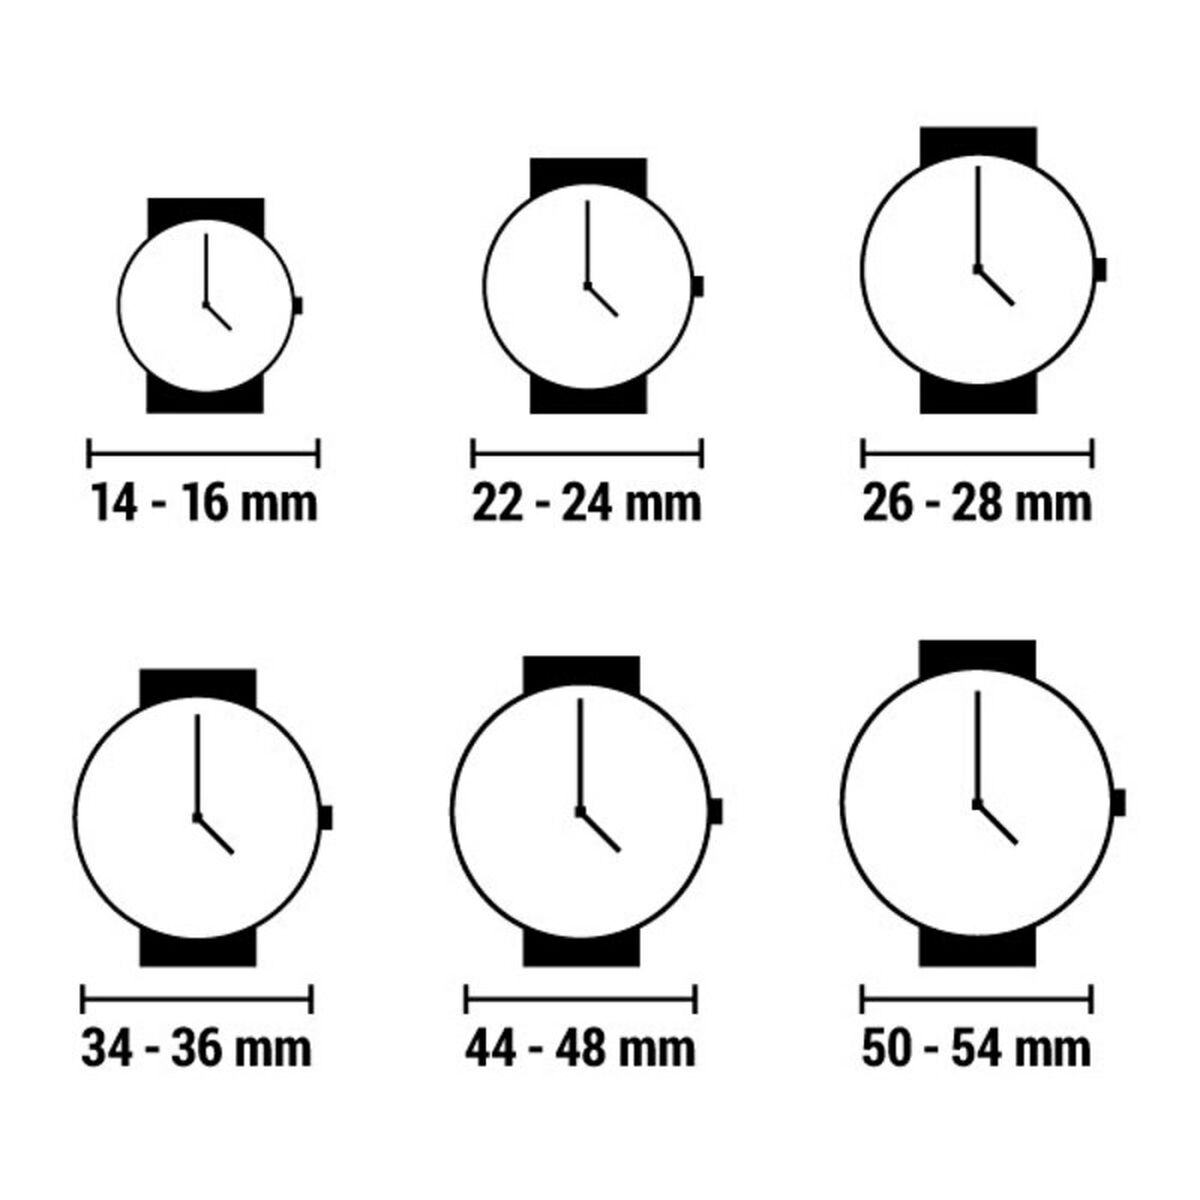 Horloge Heren Radiant RA415601 (Ø 41 mm)